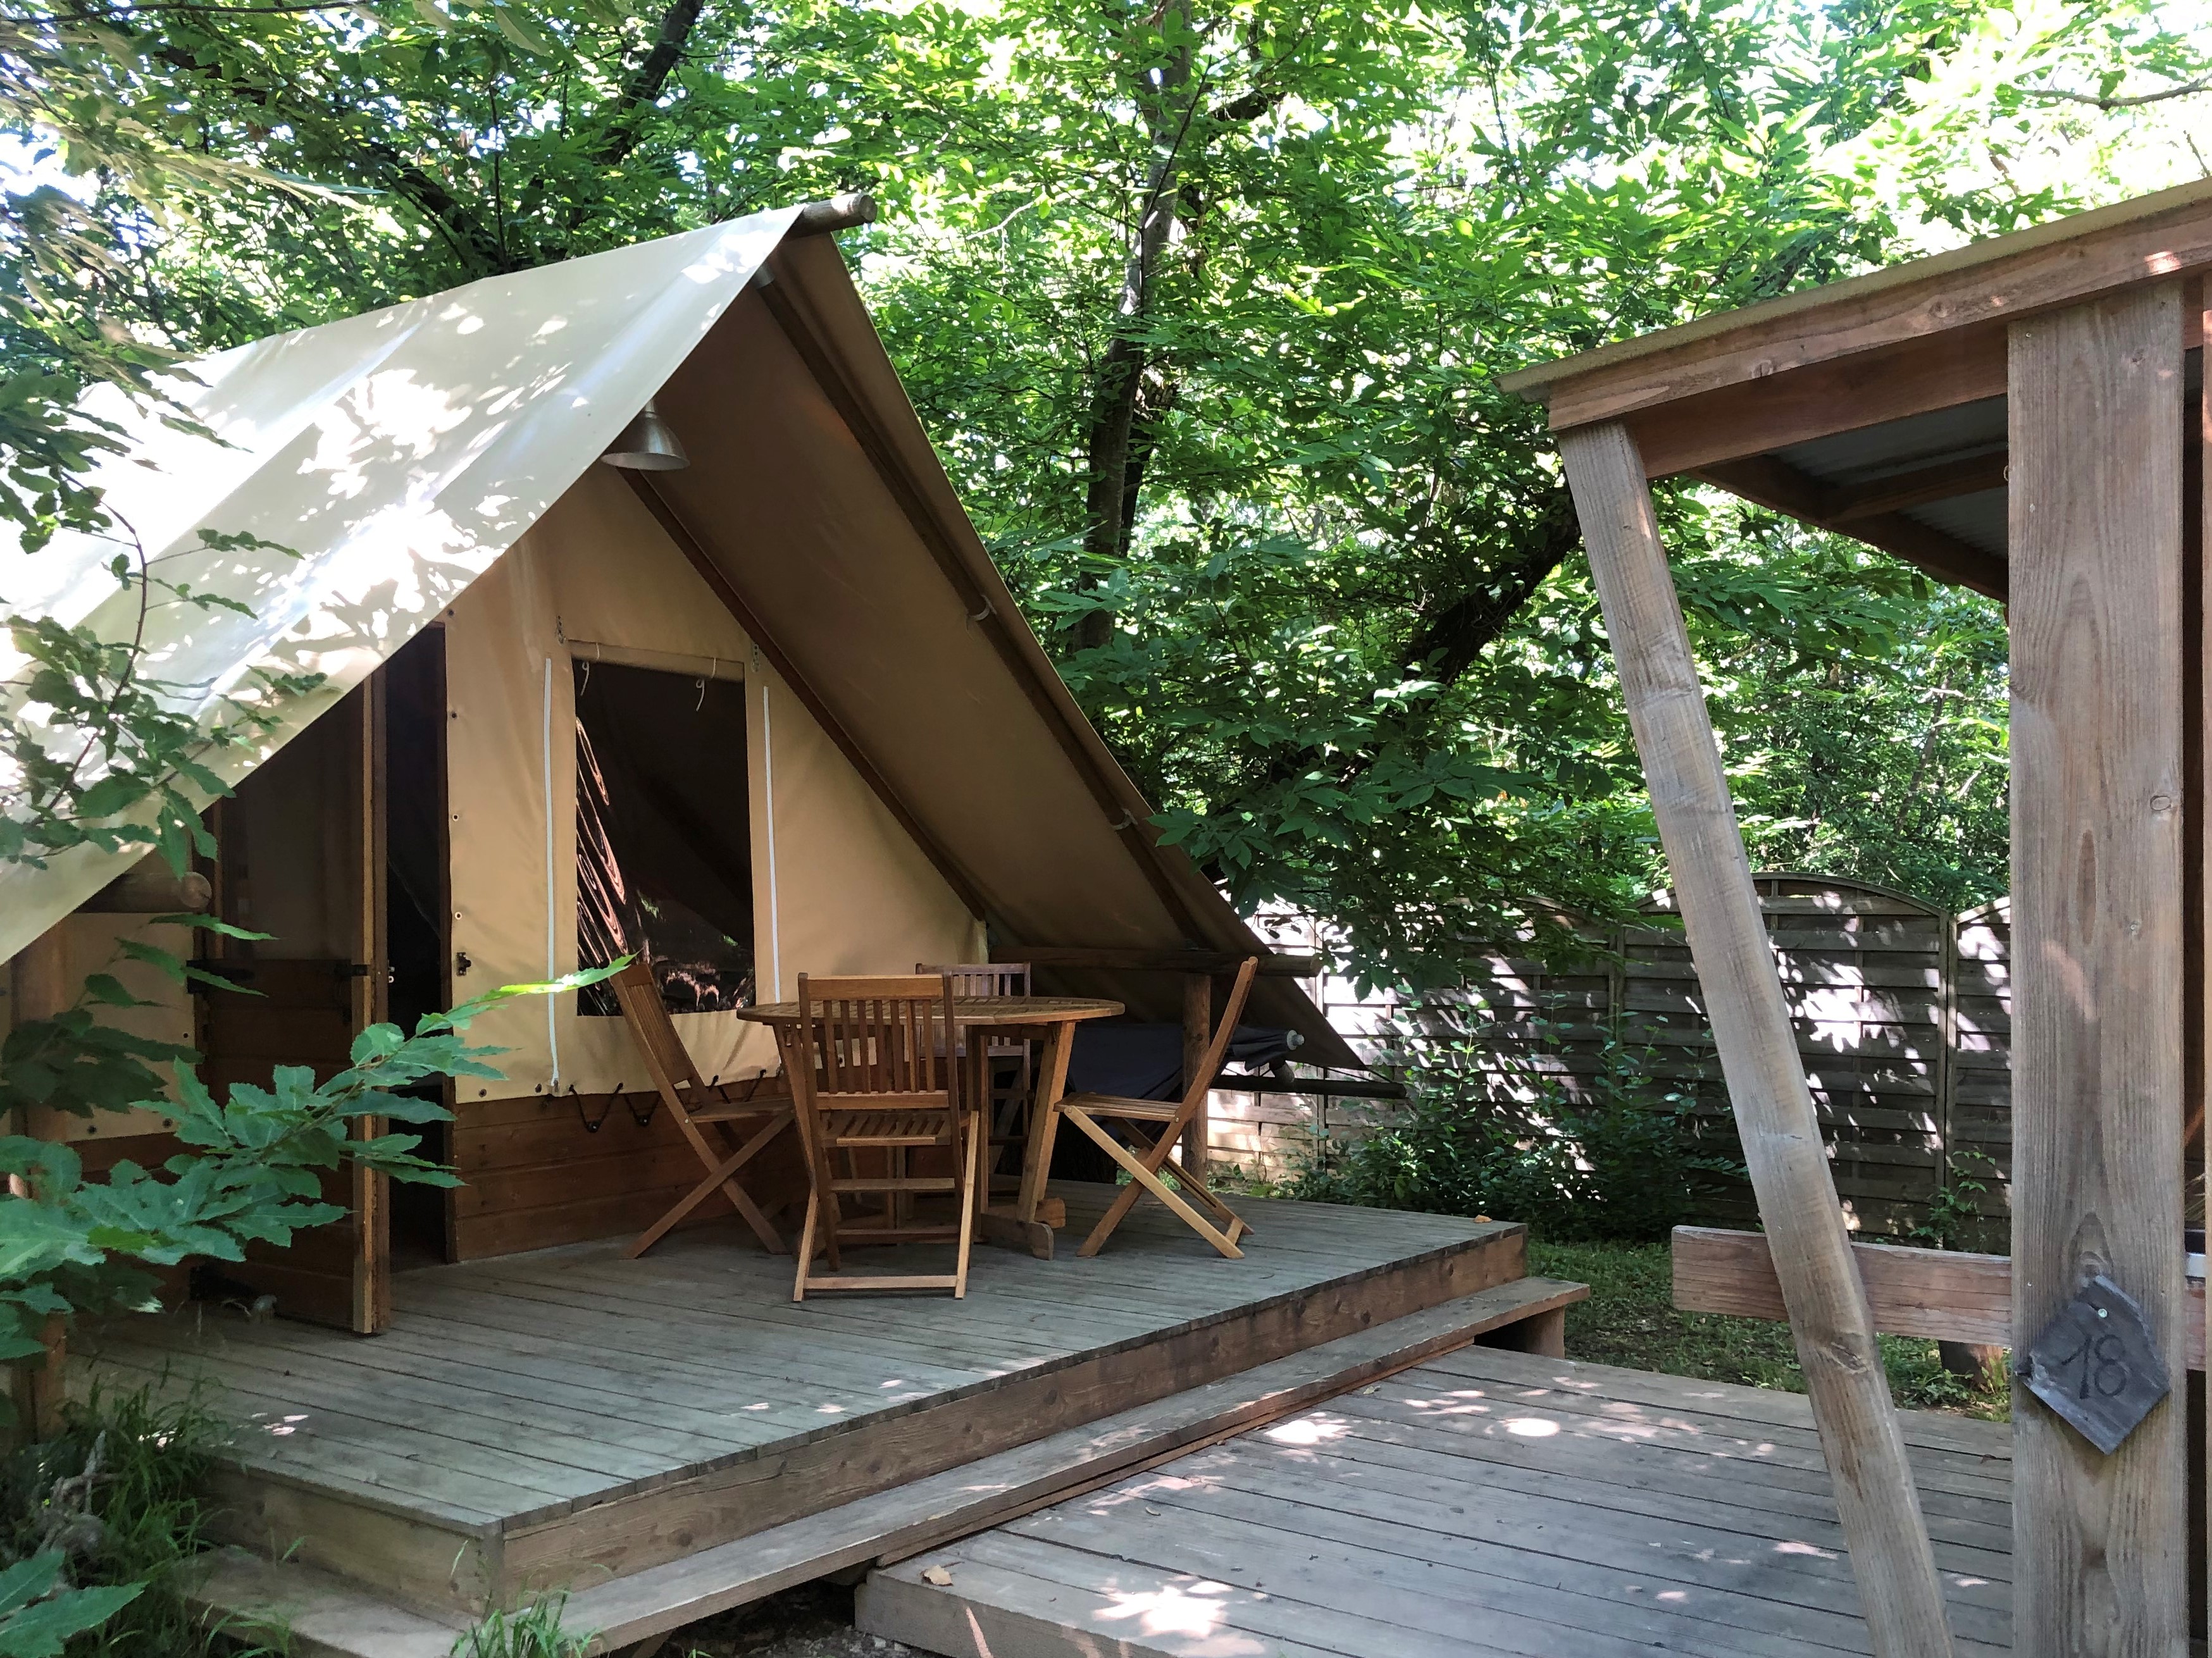 Mietunterkunft - The Huts - Camping La Châtaigneraie